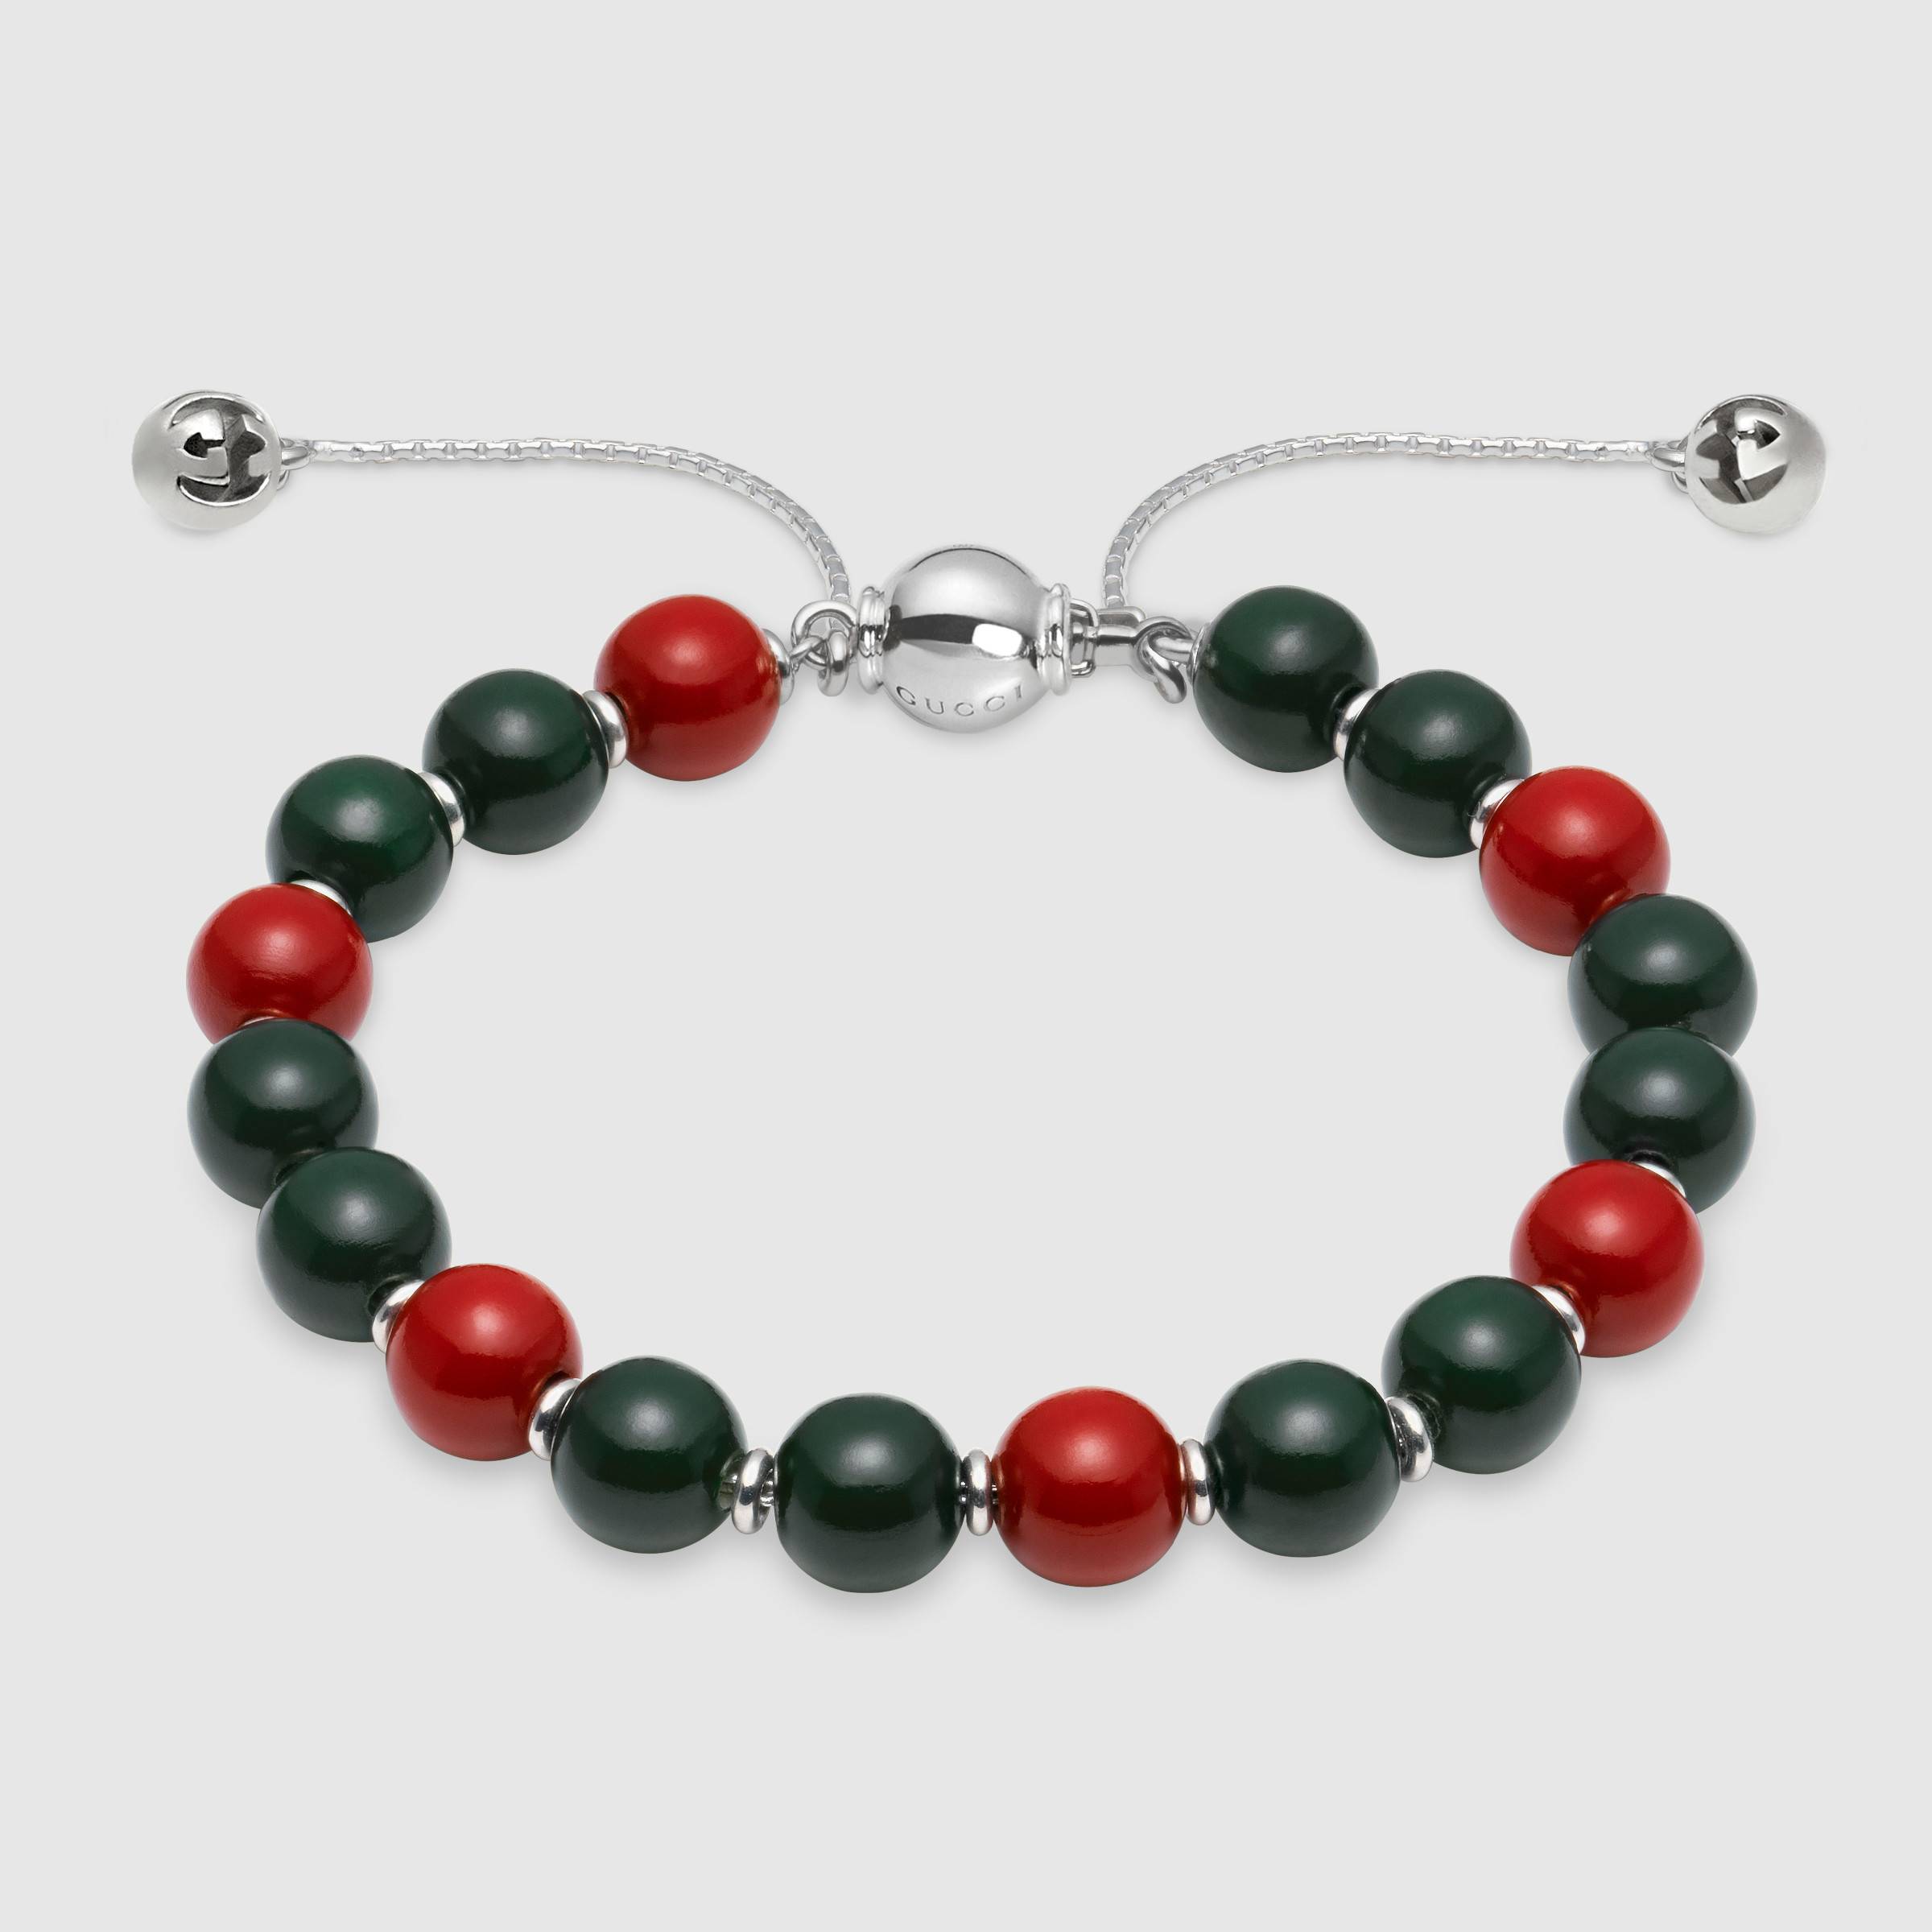 bracelet beads bracelet with wooden beads QUYIMJL